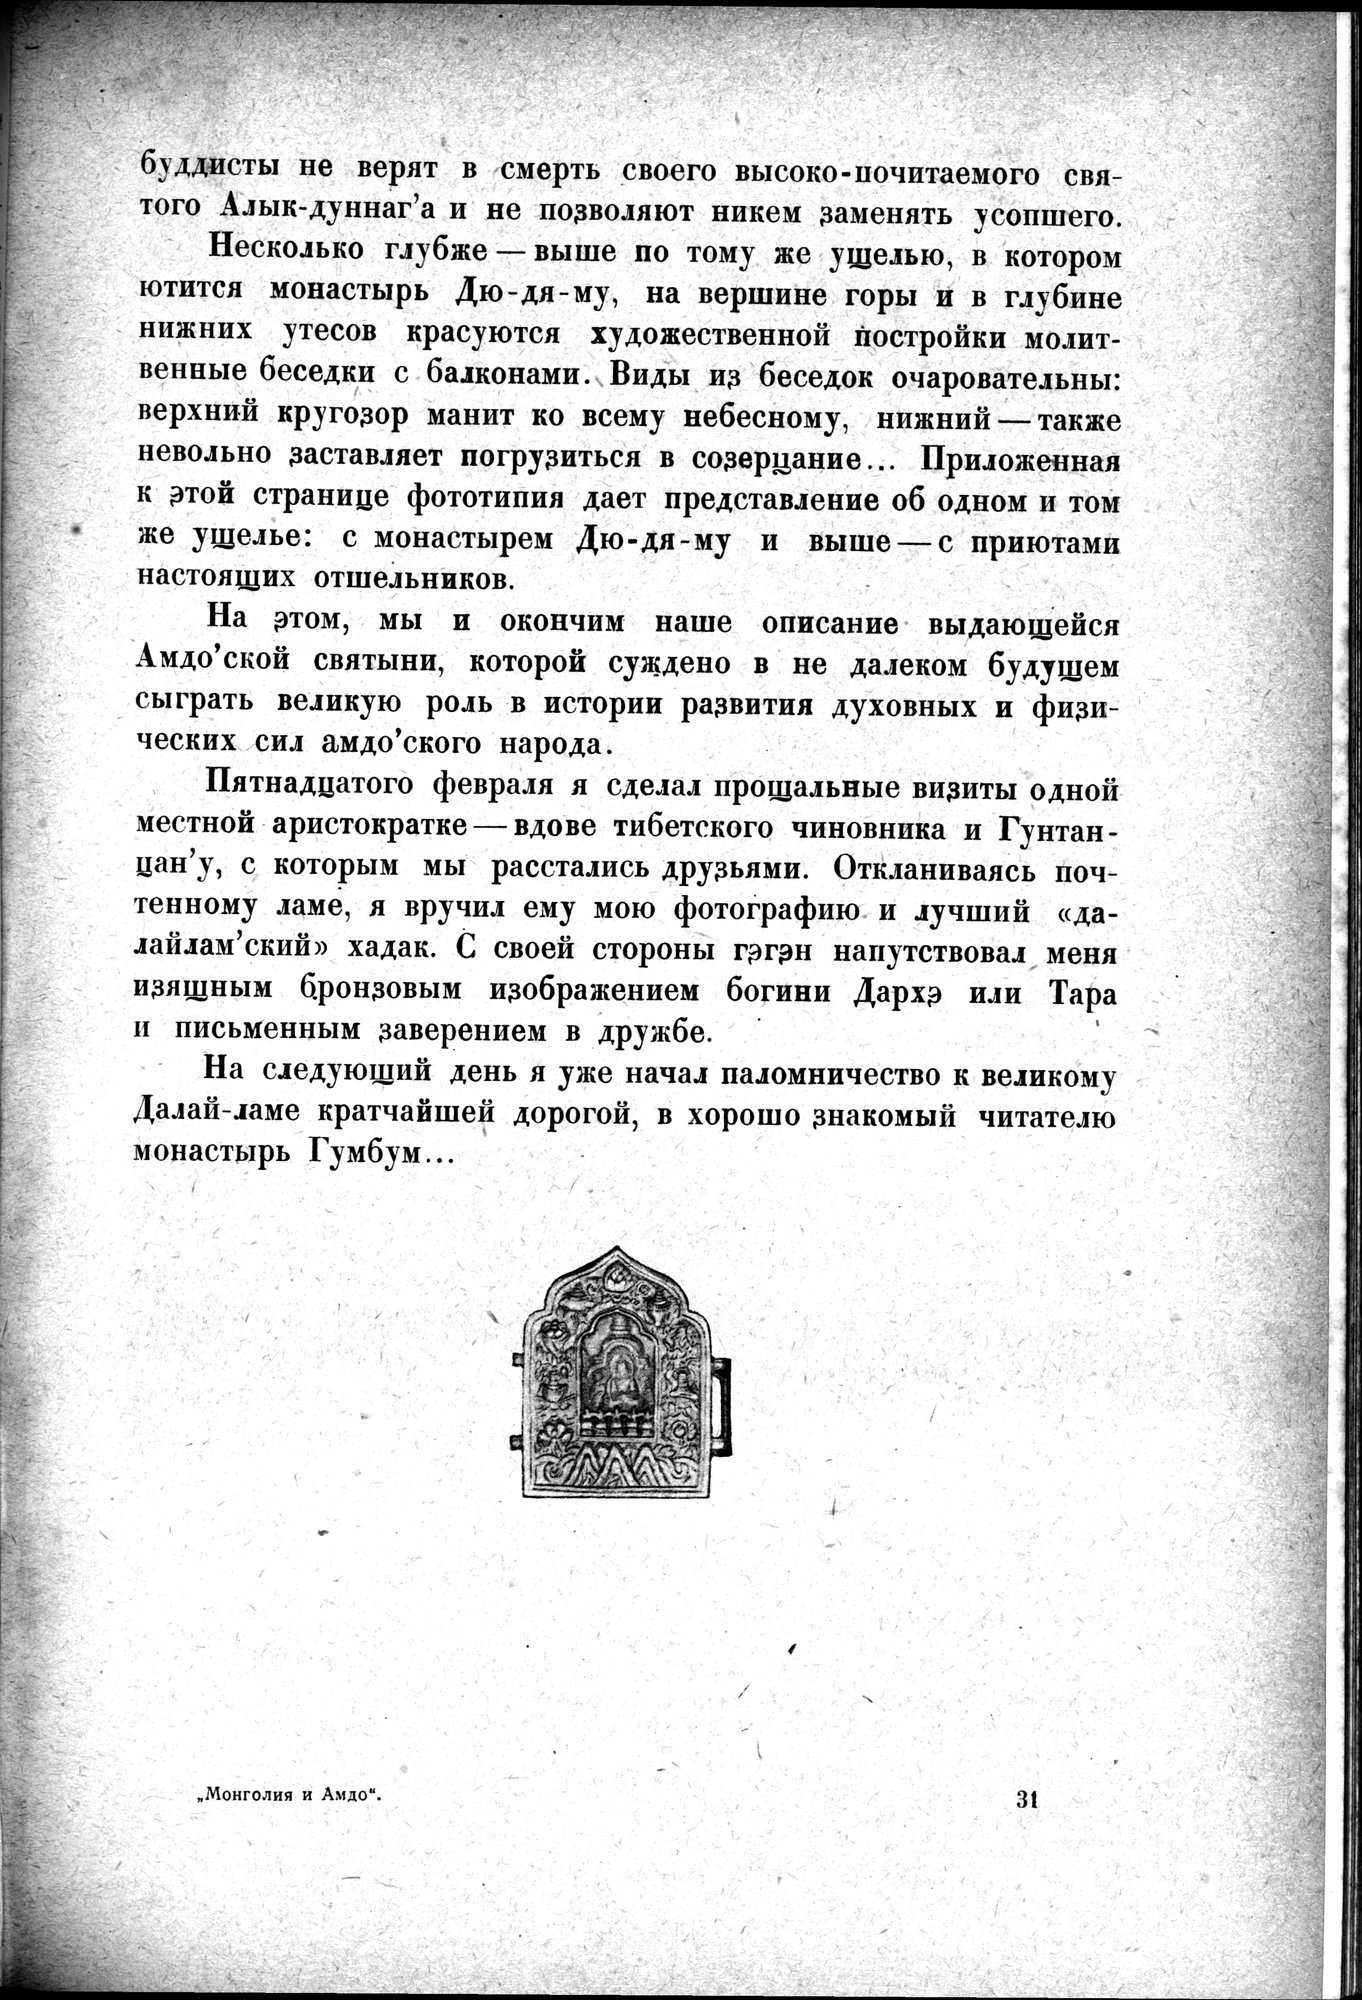 Mongoliya i Amdo i mertby gorod Khara-Khoto : vol.1 / Page 549 (Grayscale High Resolution Image)